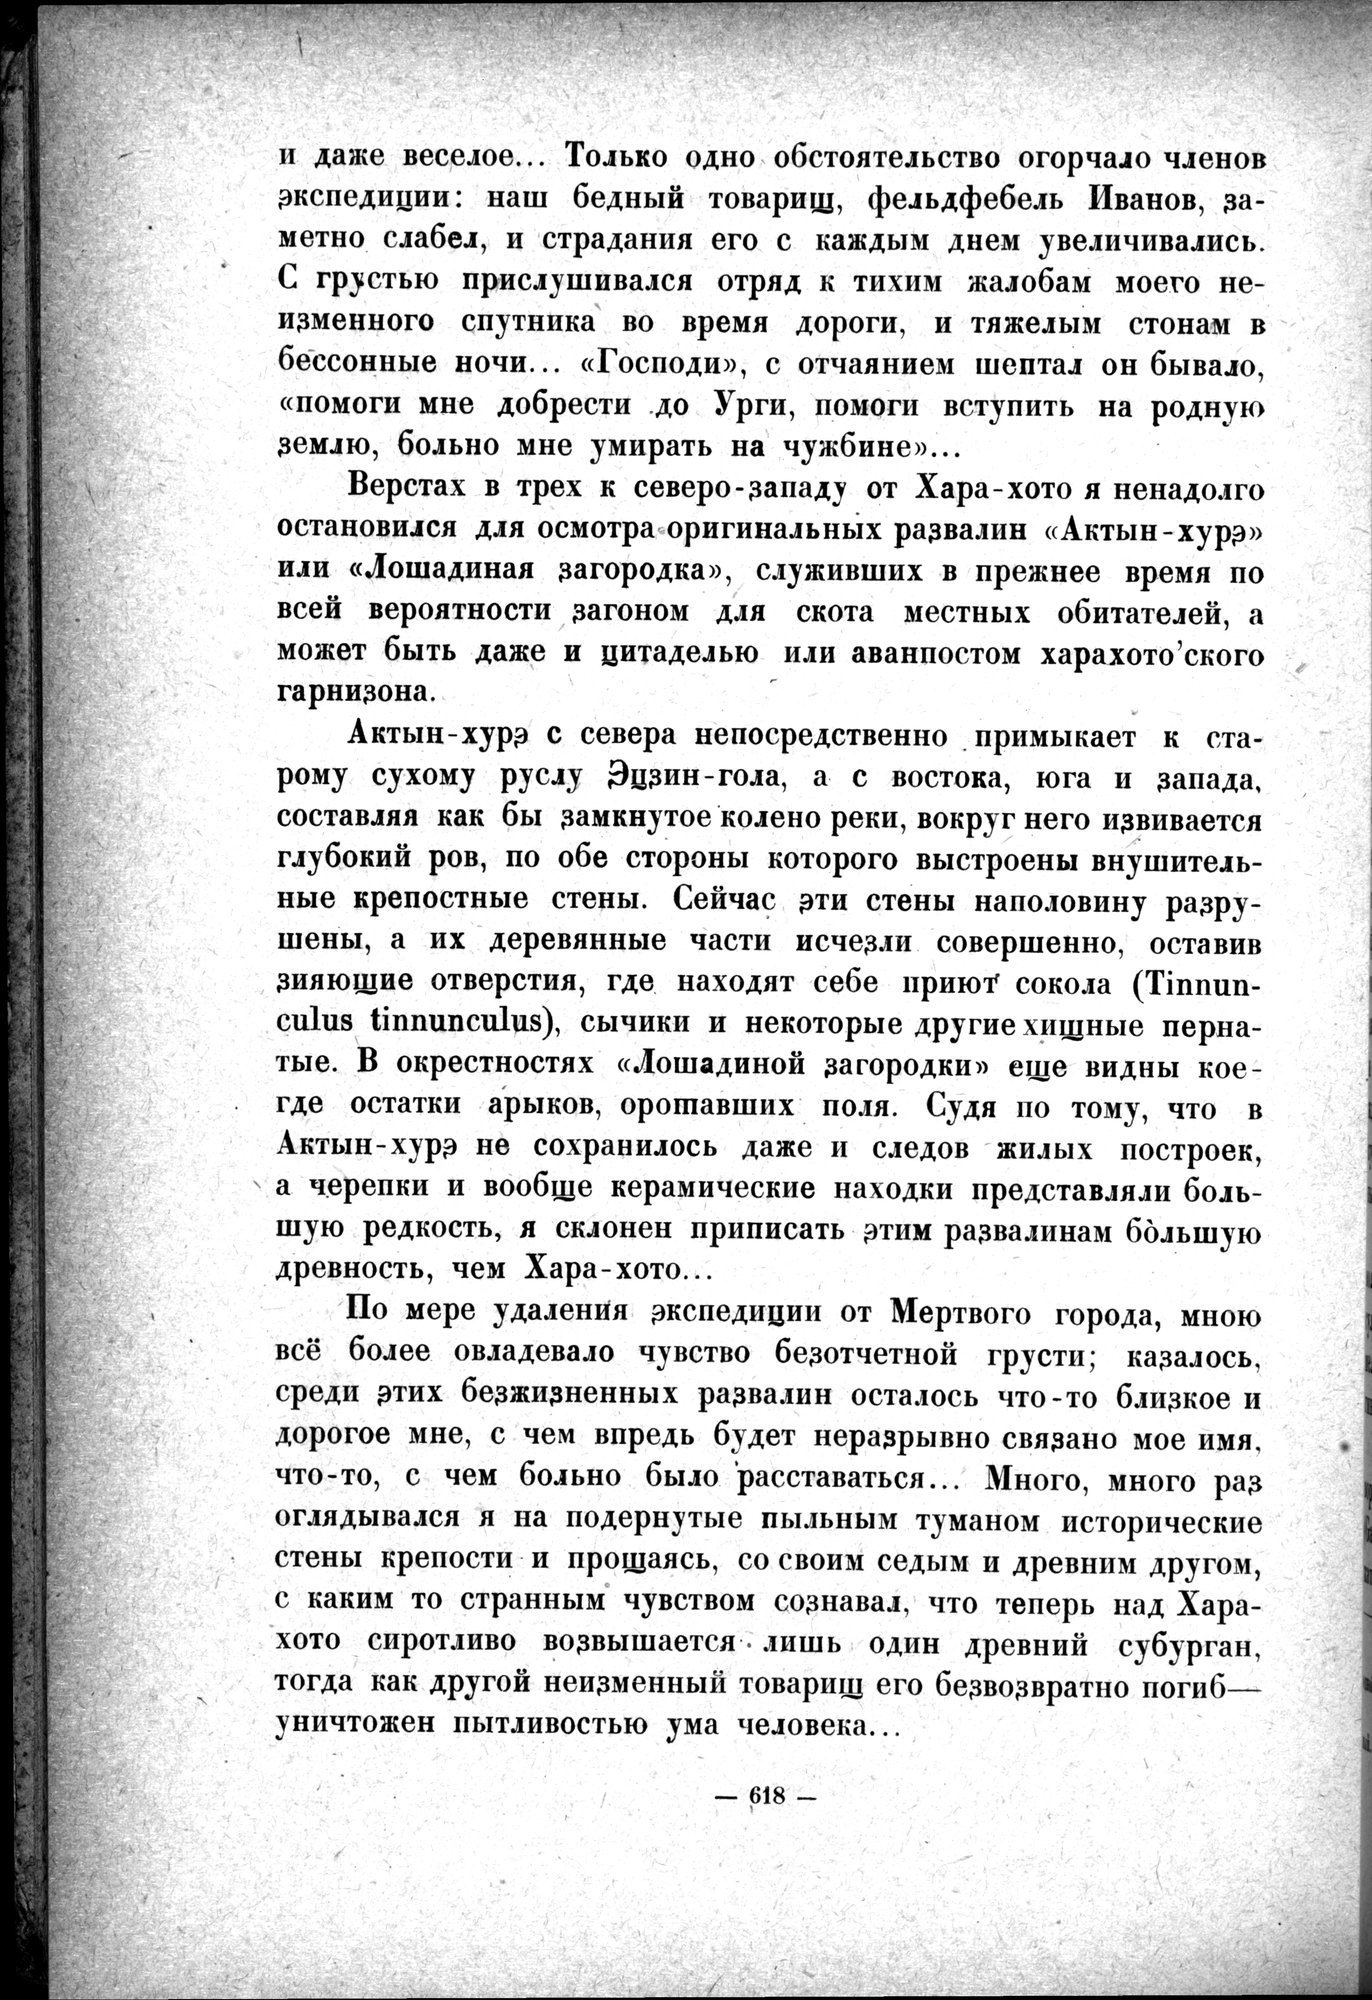 Mongoliya i Amdo i mertby gorod Khara-Khoto : vol.1 / Page 708 (Grayscale High Resolution Image)